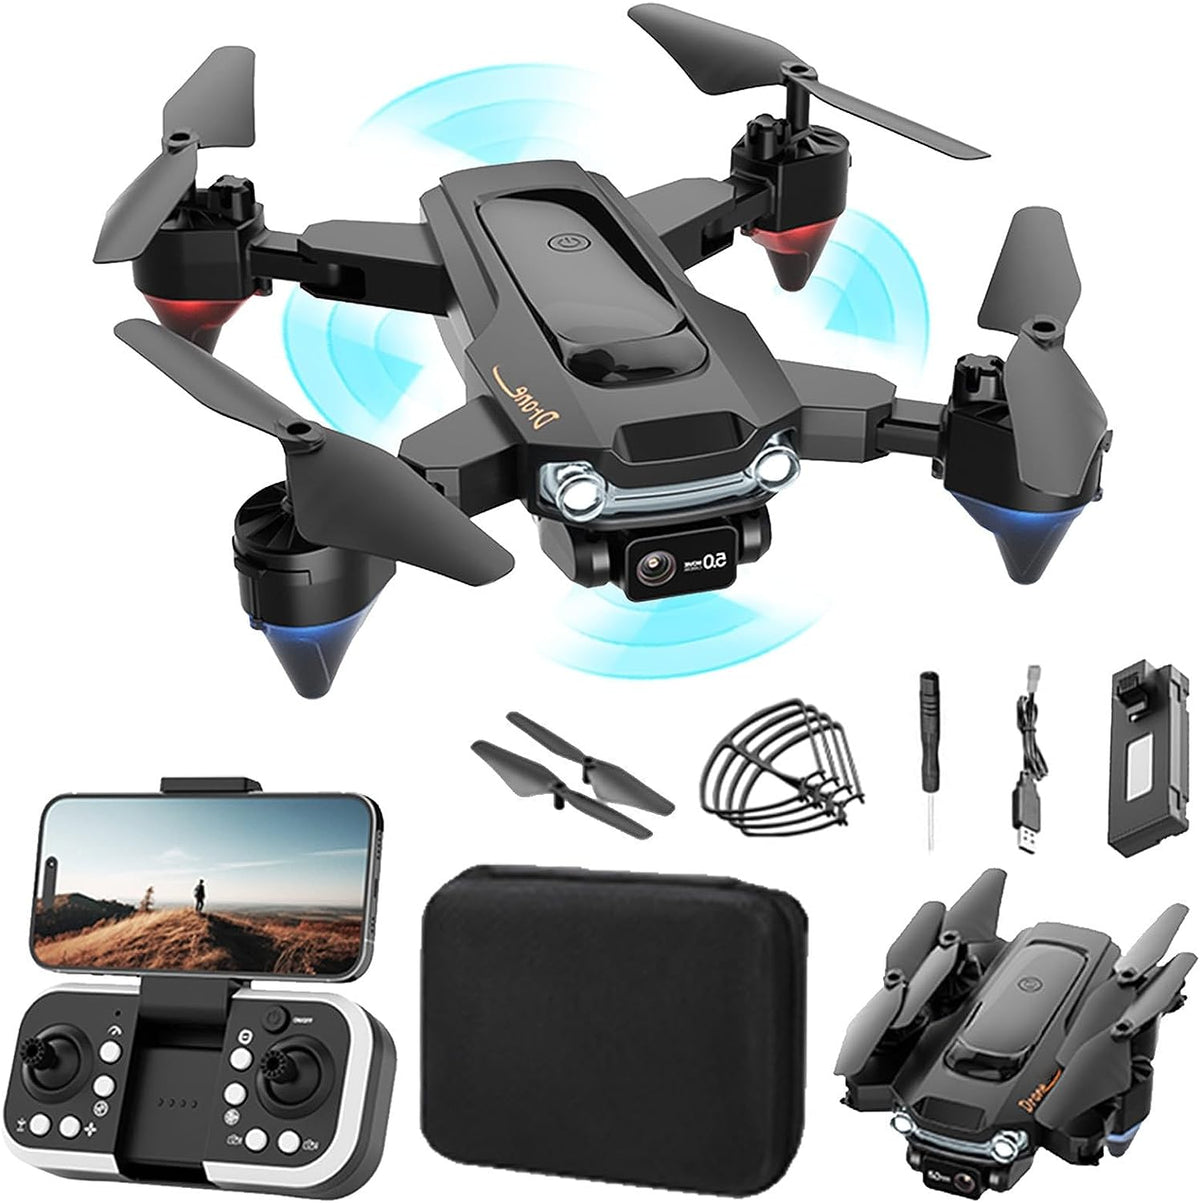 1080P HD FPV Camera Drone - RC Quadcopter With Auto Return, Drone With Dual Remote Control